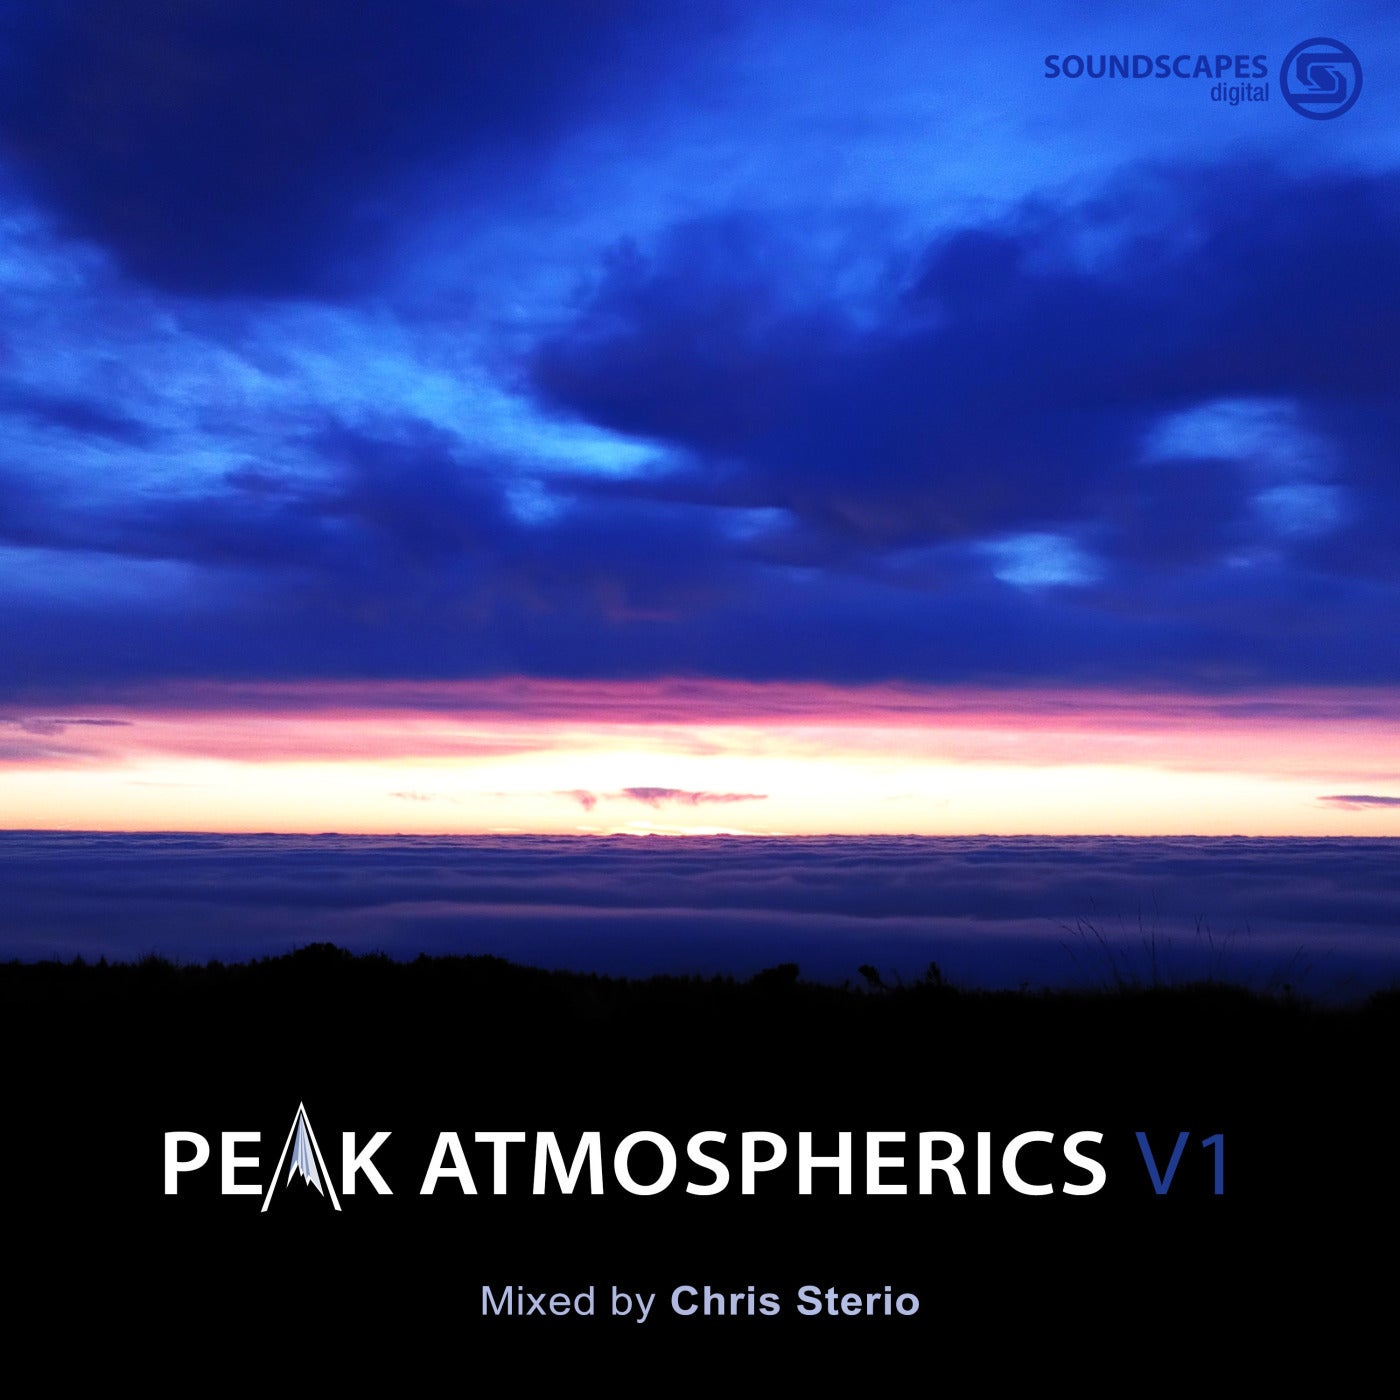 Peak Atmospherics V1